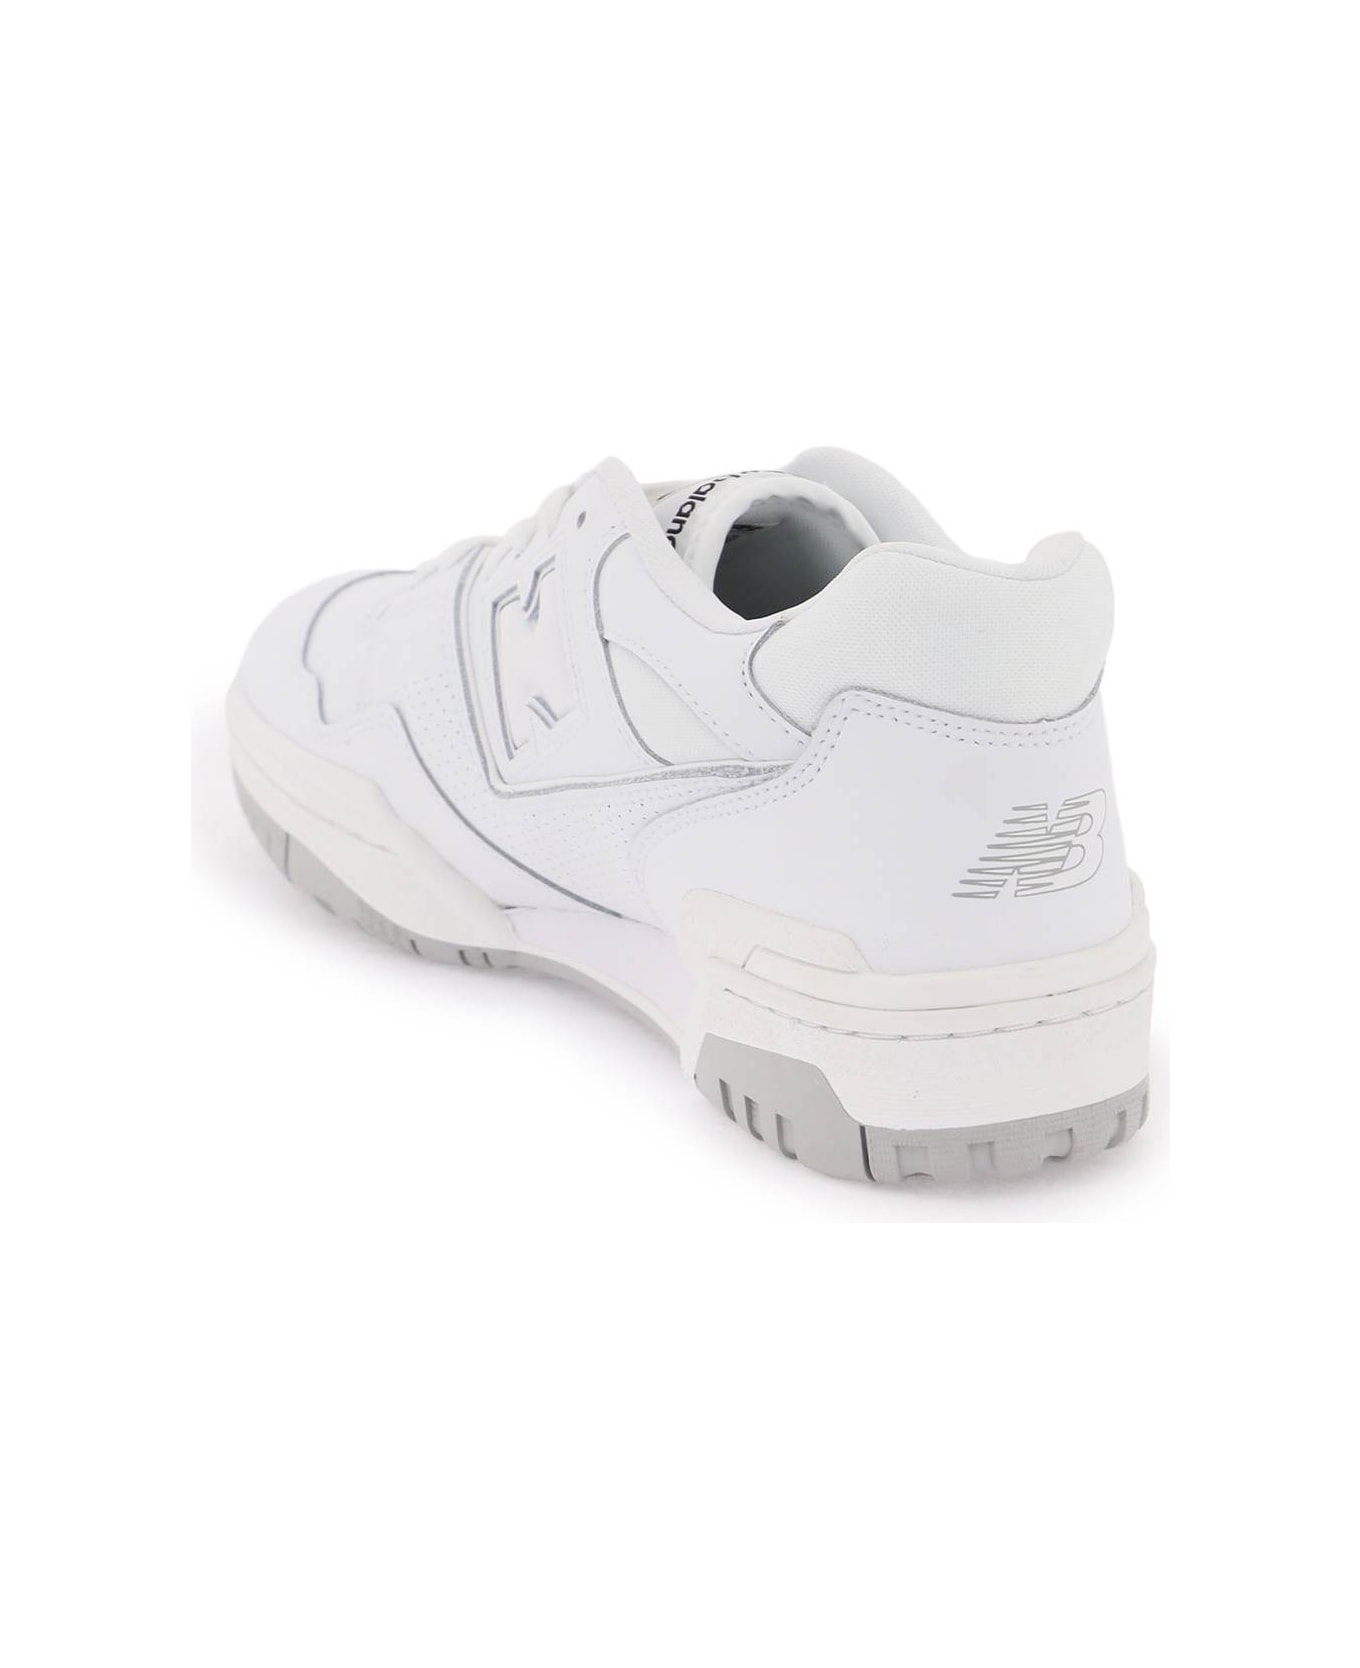 New Balance 550 Sneakers - WHITE (White) スニーカー